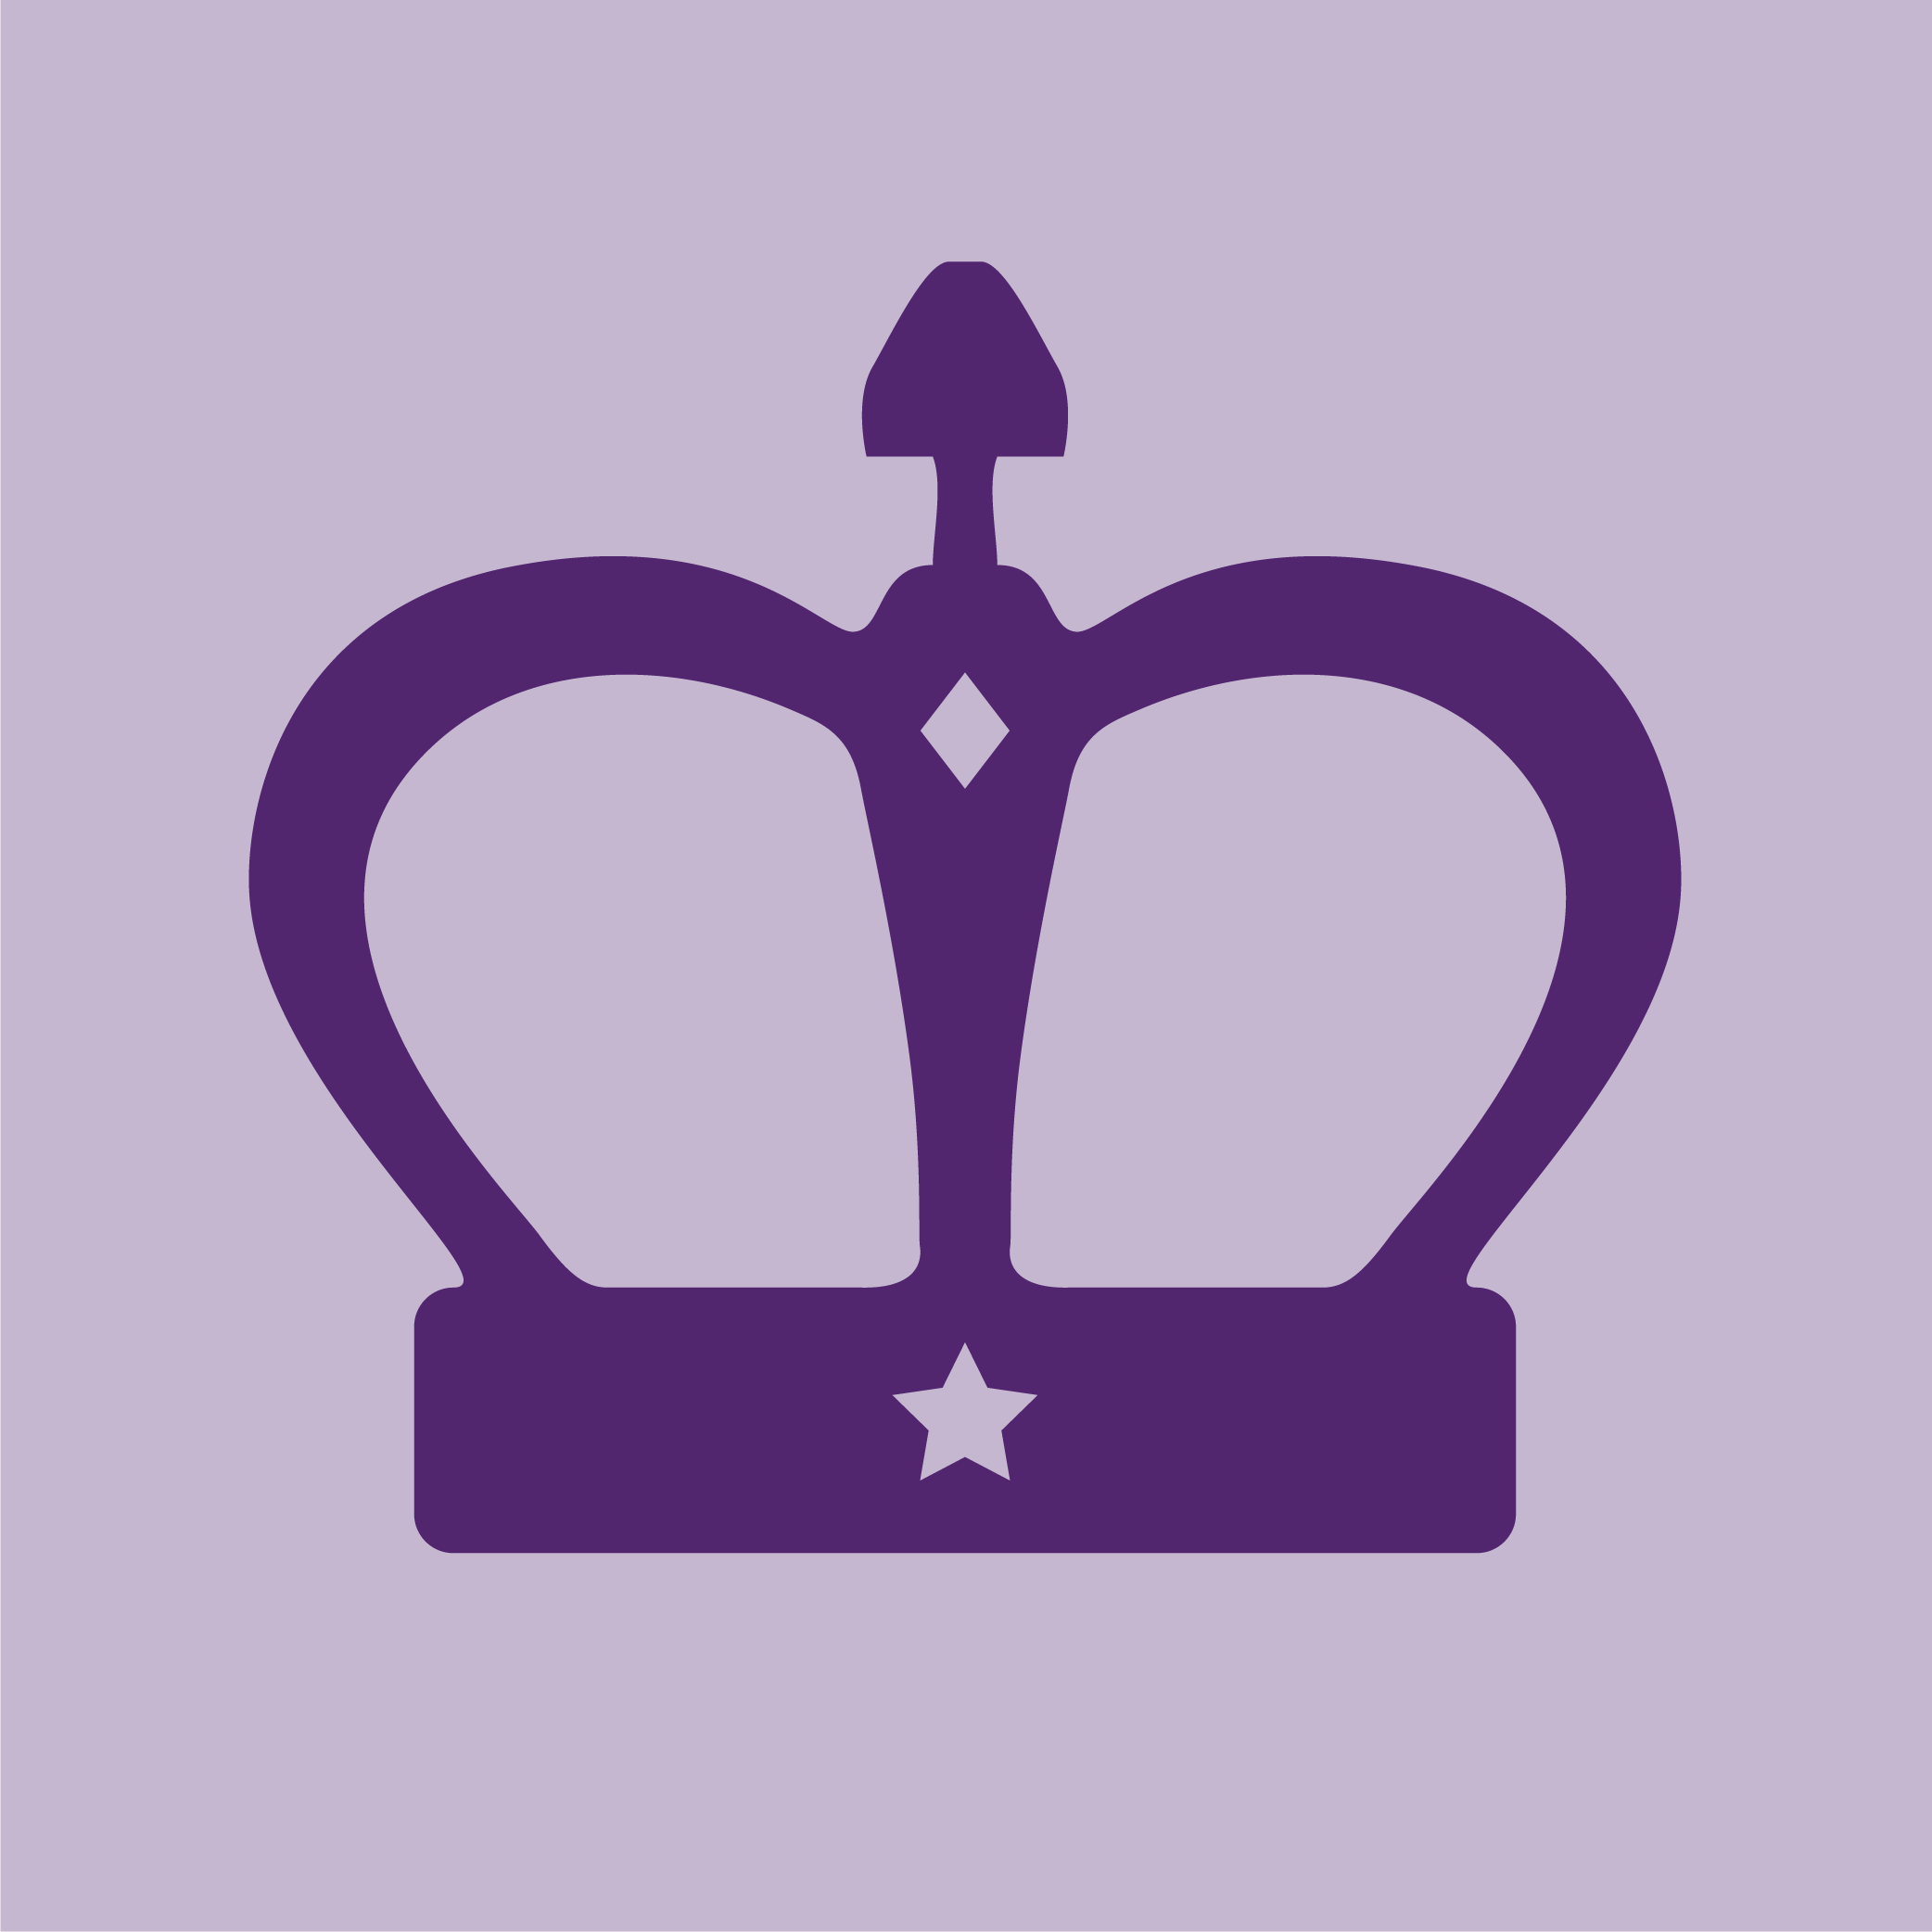 richcraft logo social icons purple on light purple